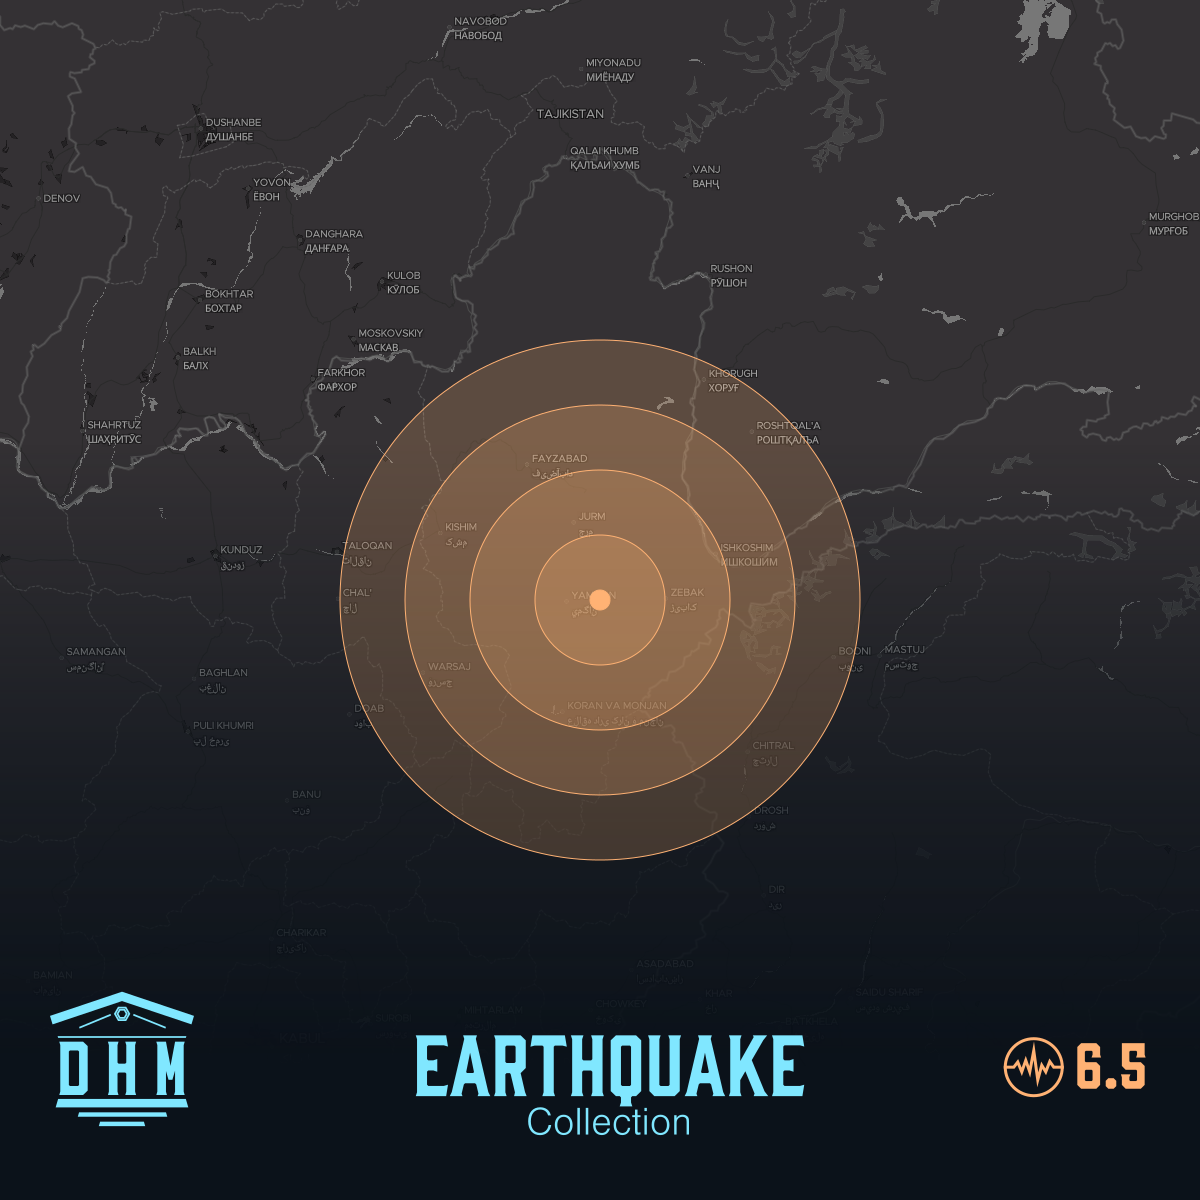 DHM: M6+ Quake us7000jln7